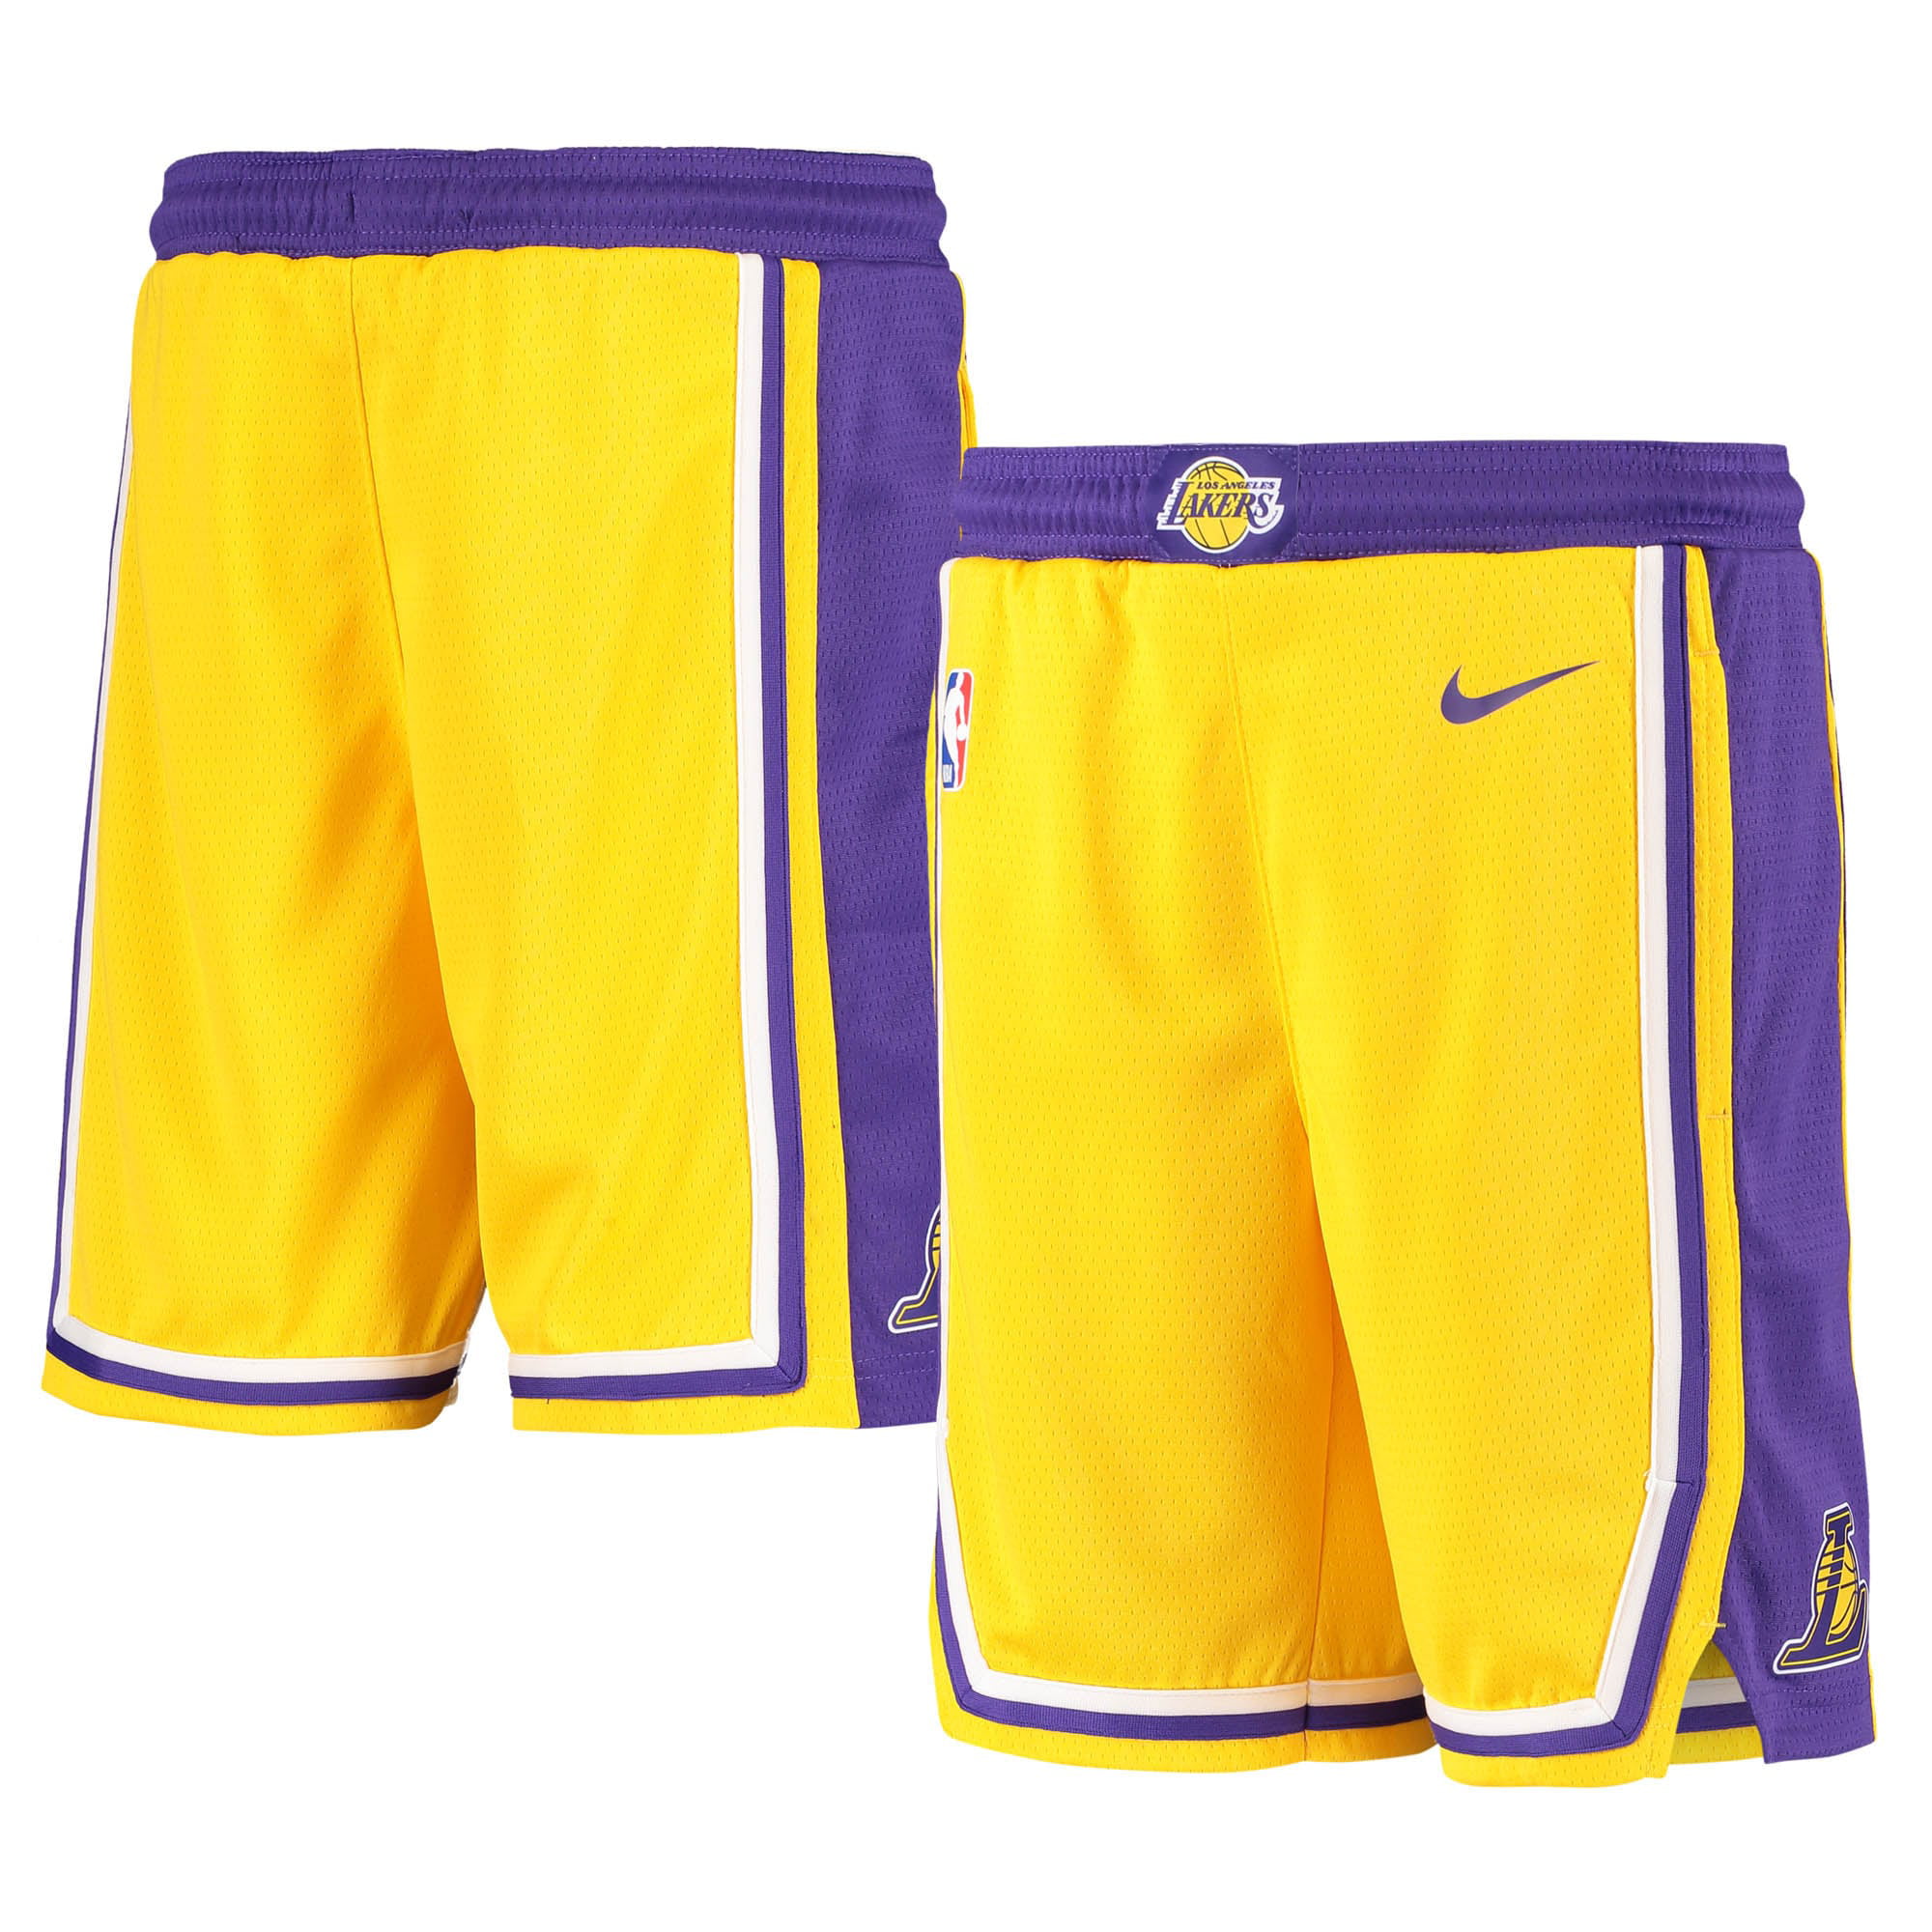 Retro Los Angeles Lakers Basketball Shorts Stitched Gold Logo Purple 